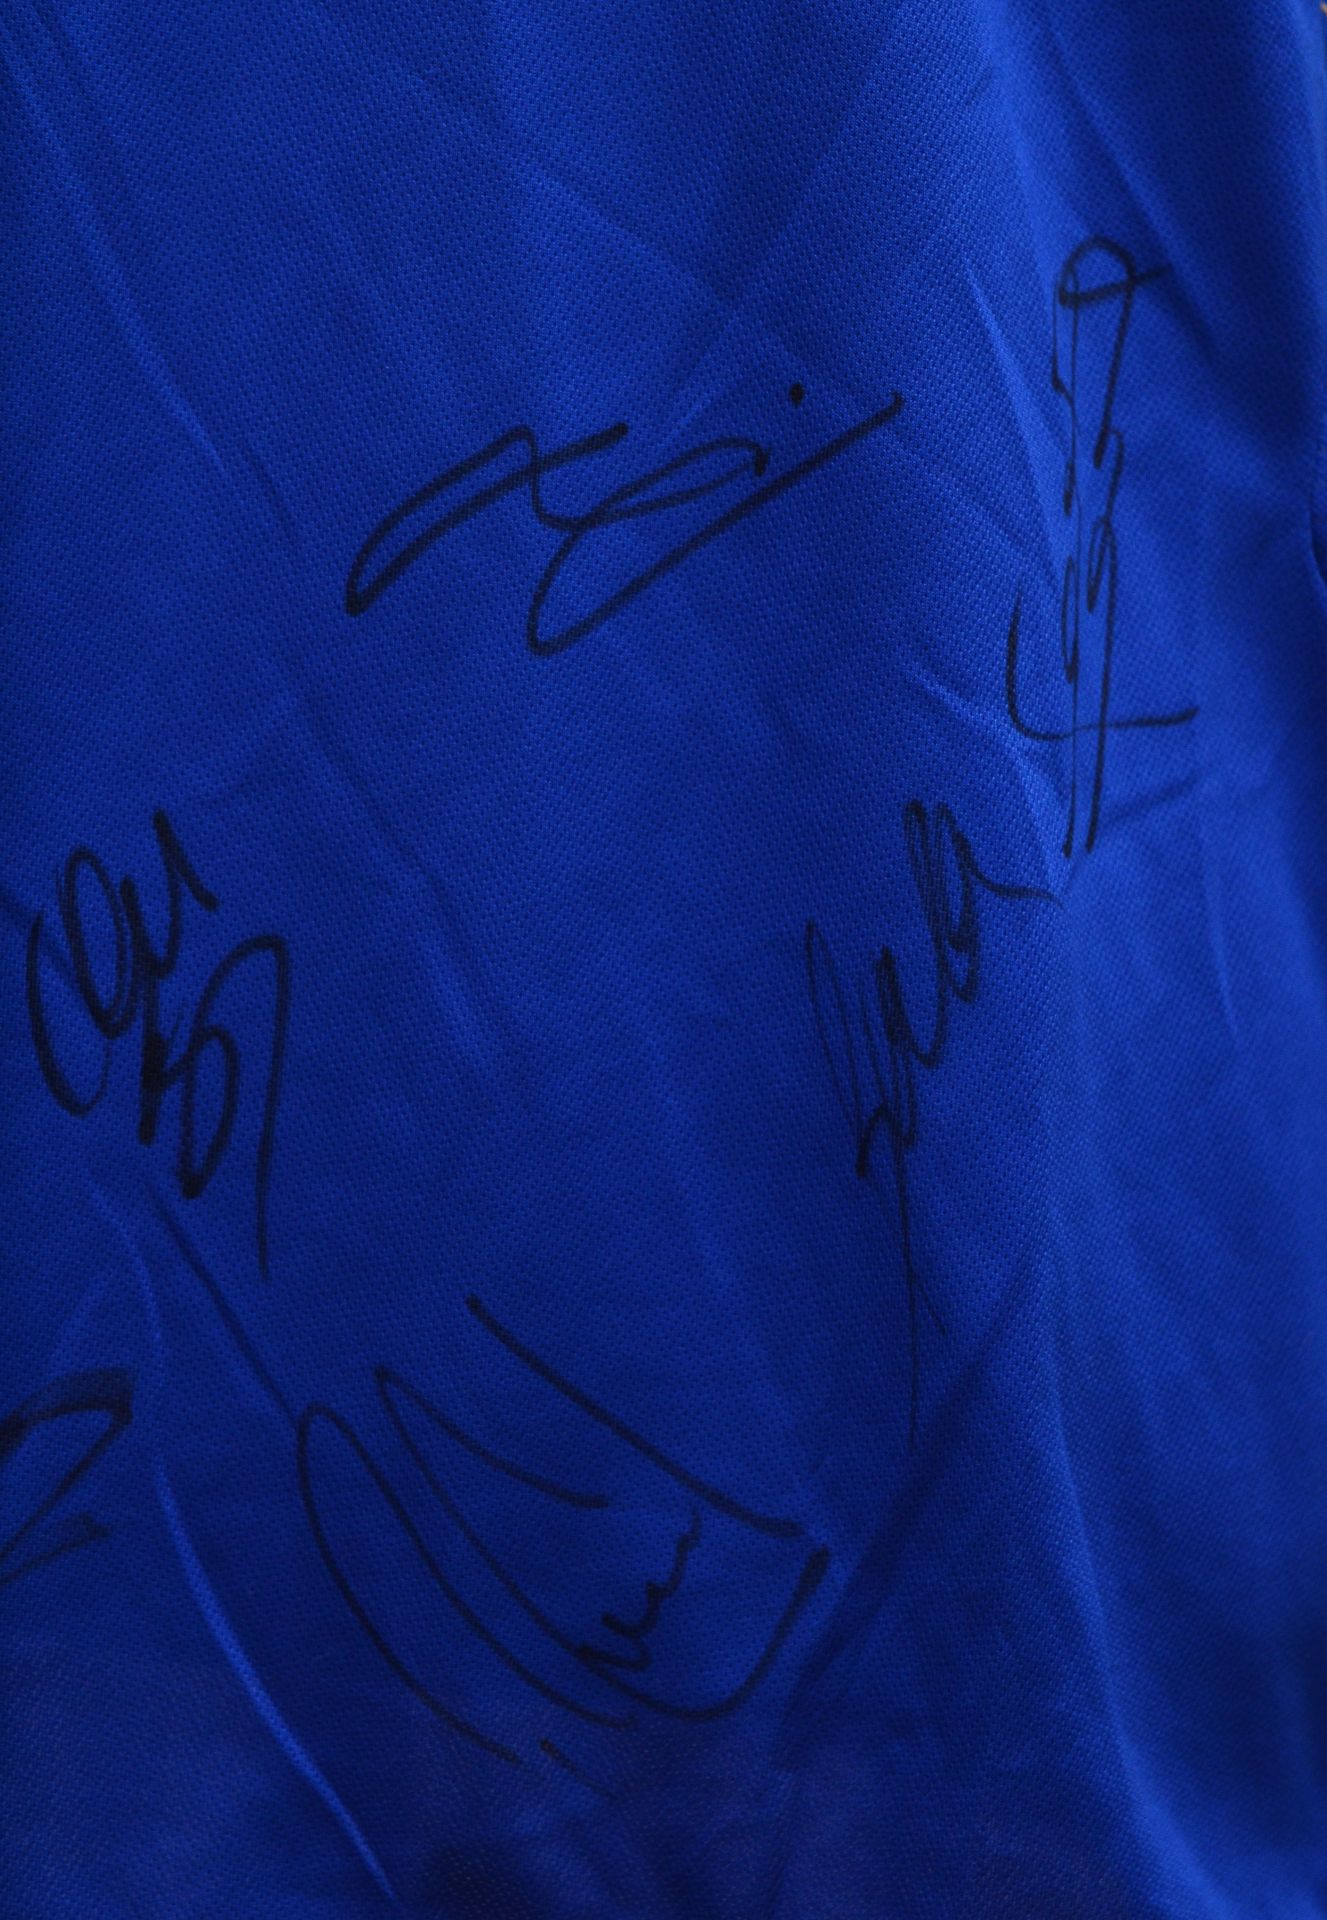 Chelsea Players Signed Shirt 2005-2006 Large Centenary Premier League winning season Jose Mourinho - Image 5 of 7